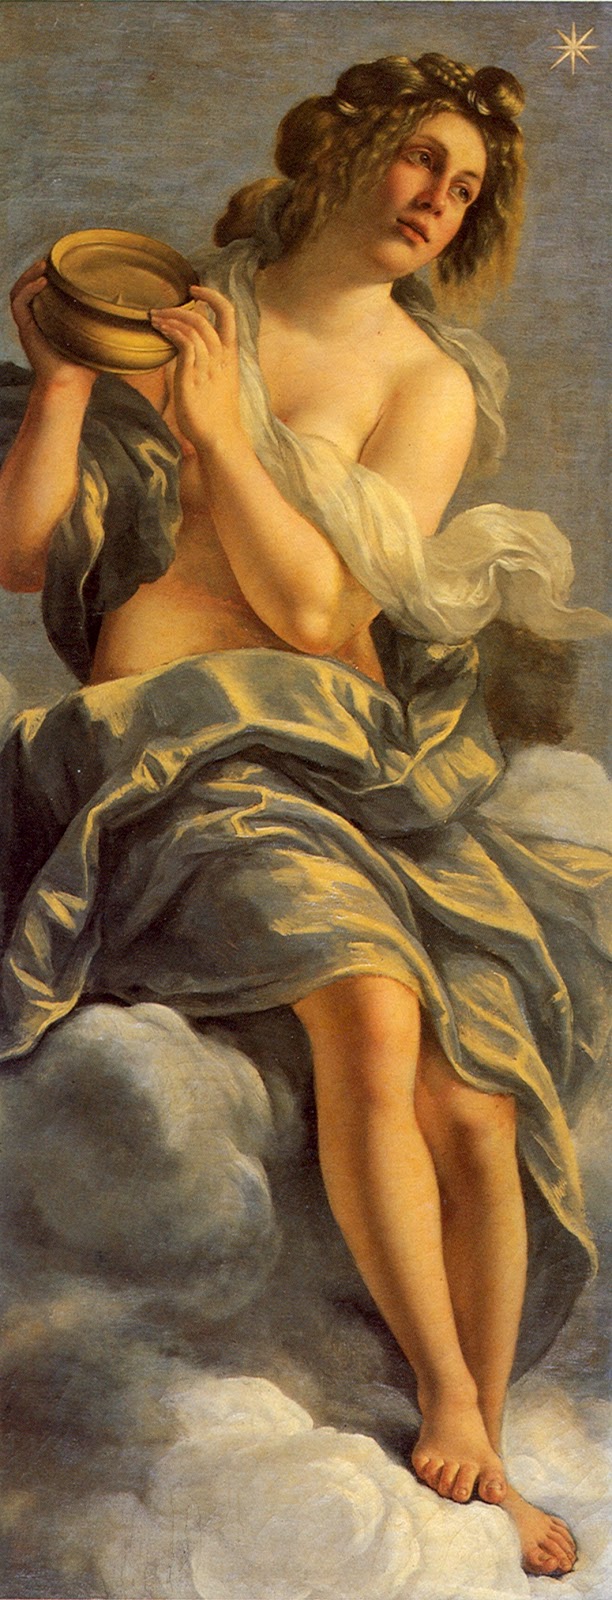 Artemisia+Gentileschi-1593-1652 (6).jpg